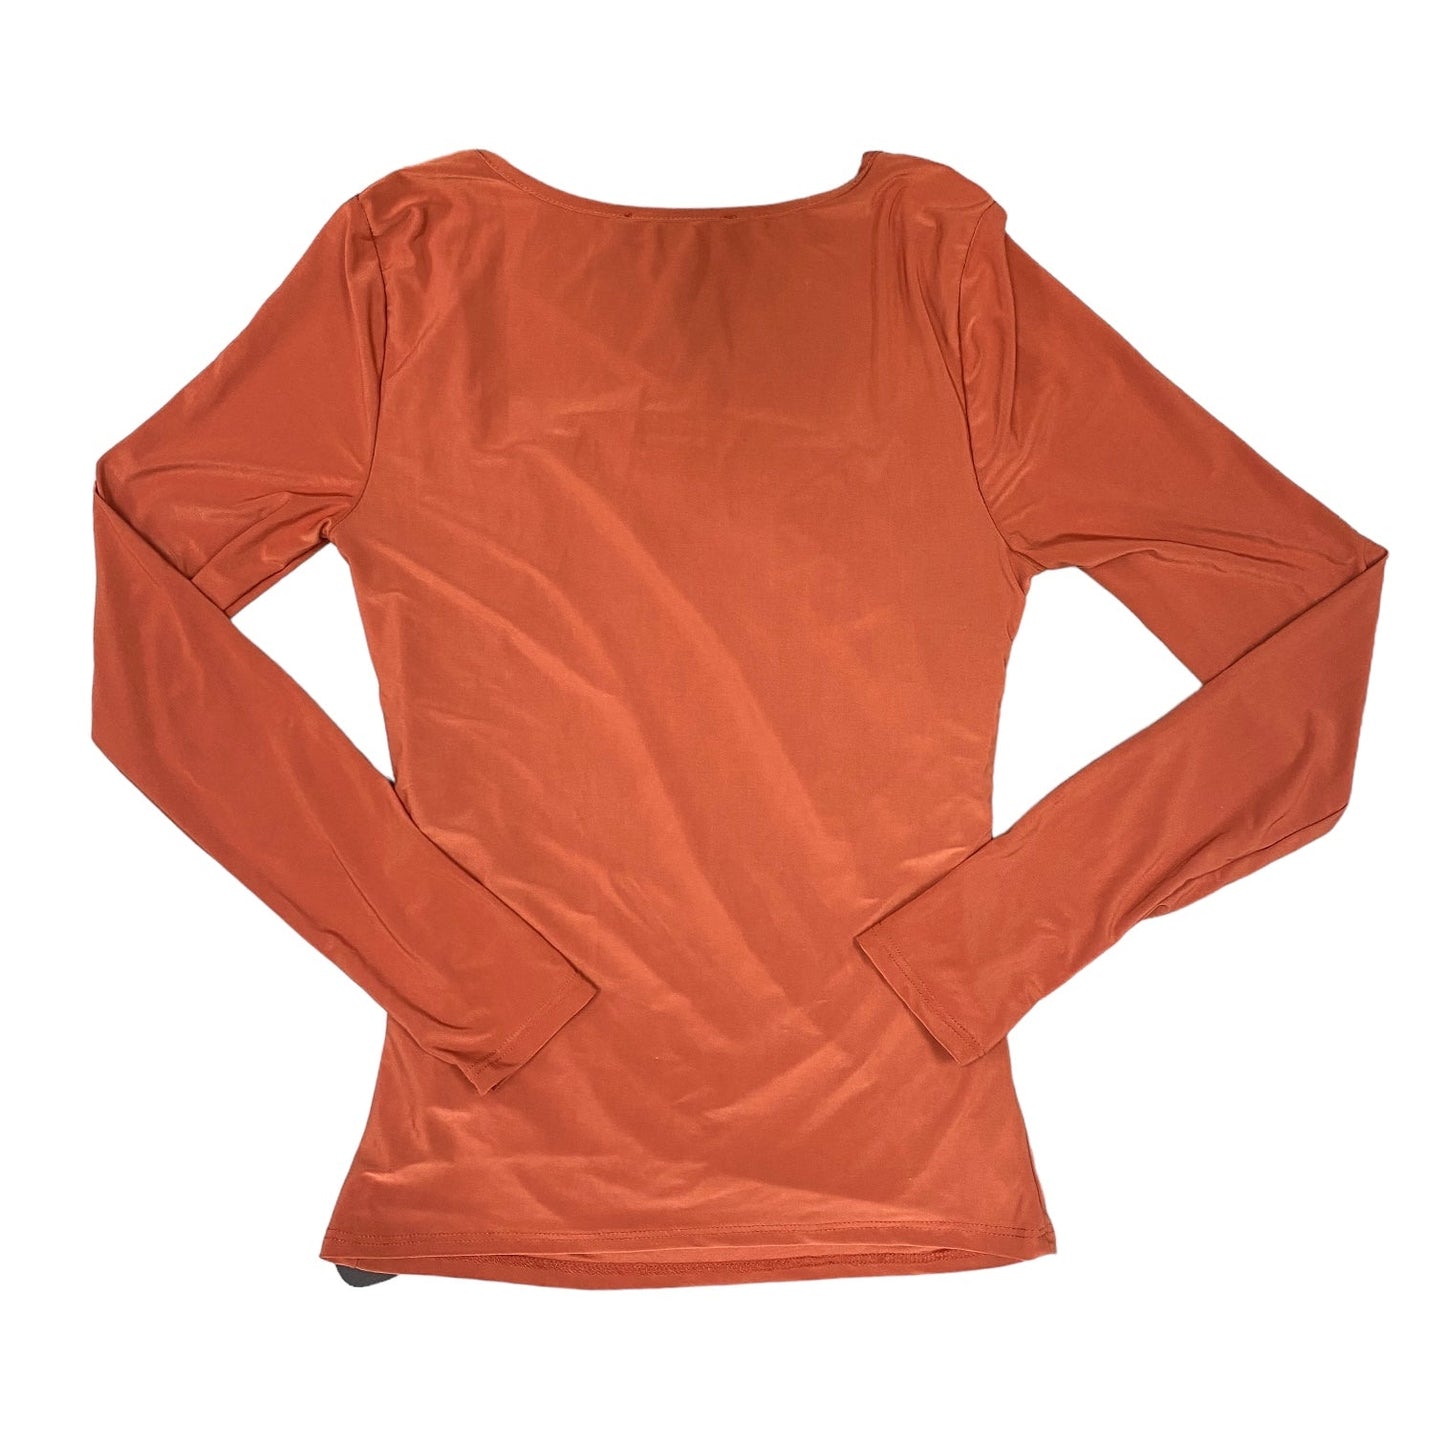 Orange Top Long Sleeve 21 SAINTS, Size S